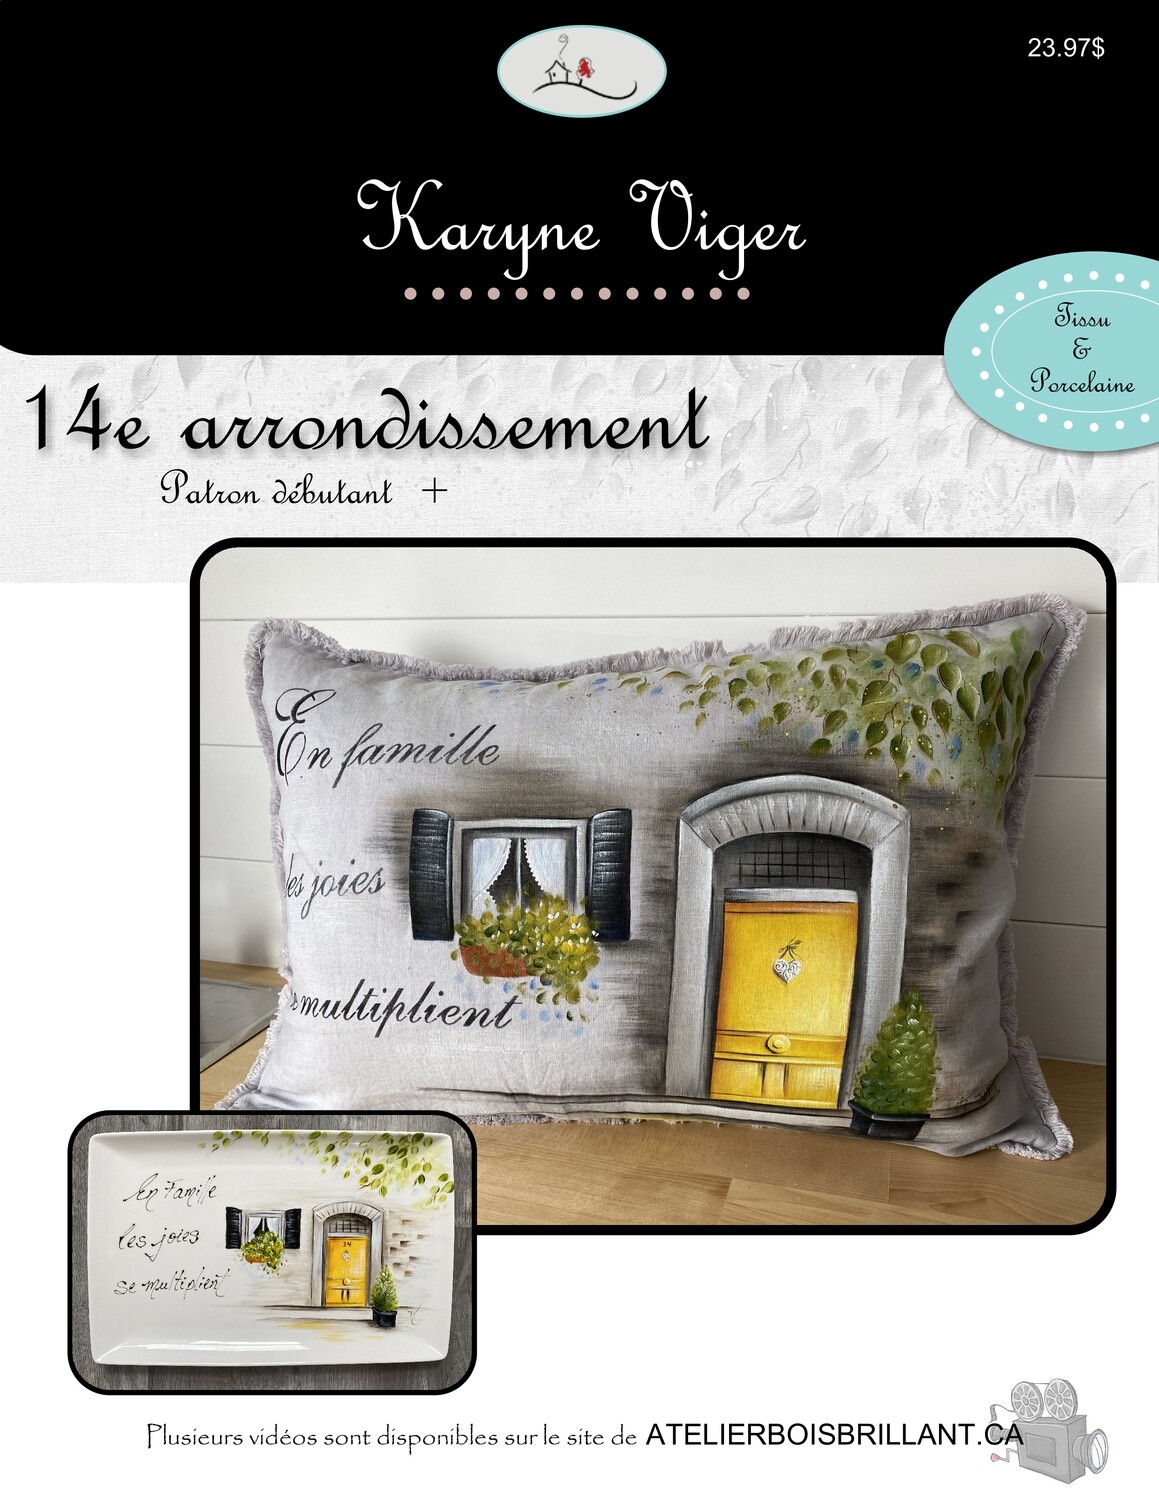 14e arrondissement /Karyne Viger